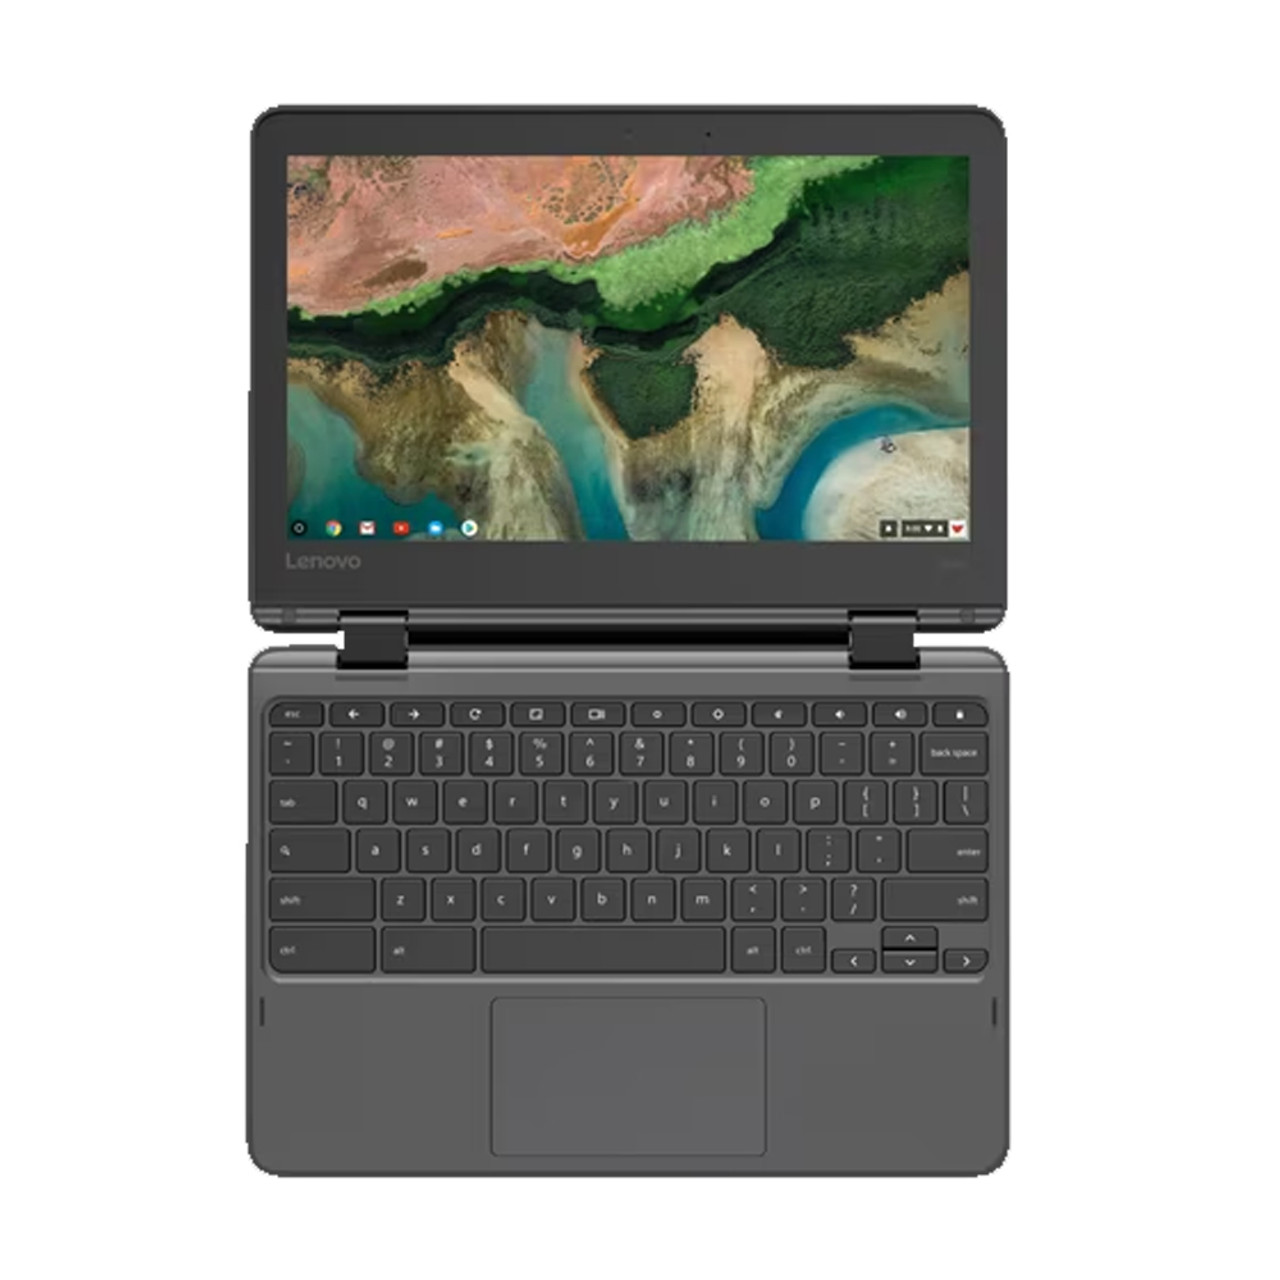 Lenovo 300e Gen 2 11.6" Touchscreen Laptop N4000 4GB 32GB eMMC Chrome OS | 81MB0004US | Manufacturer Refurbished